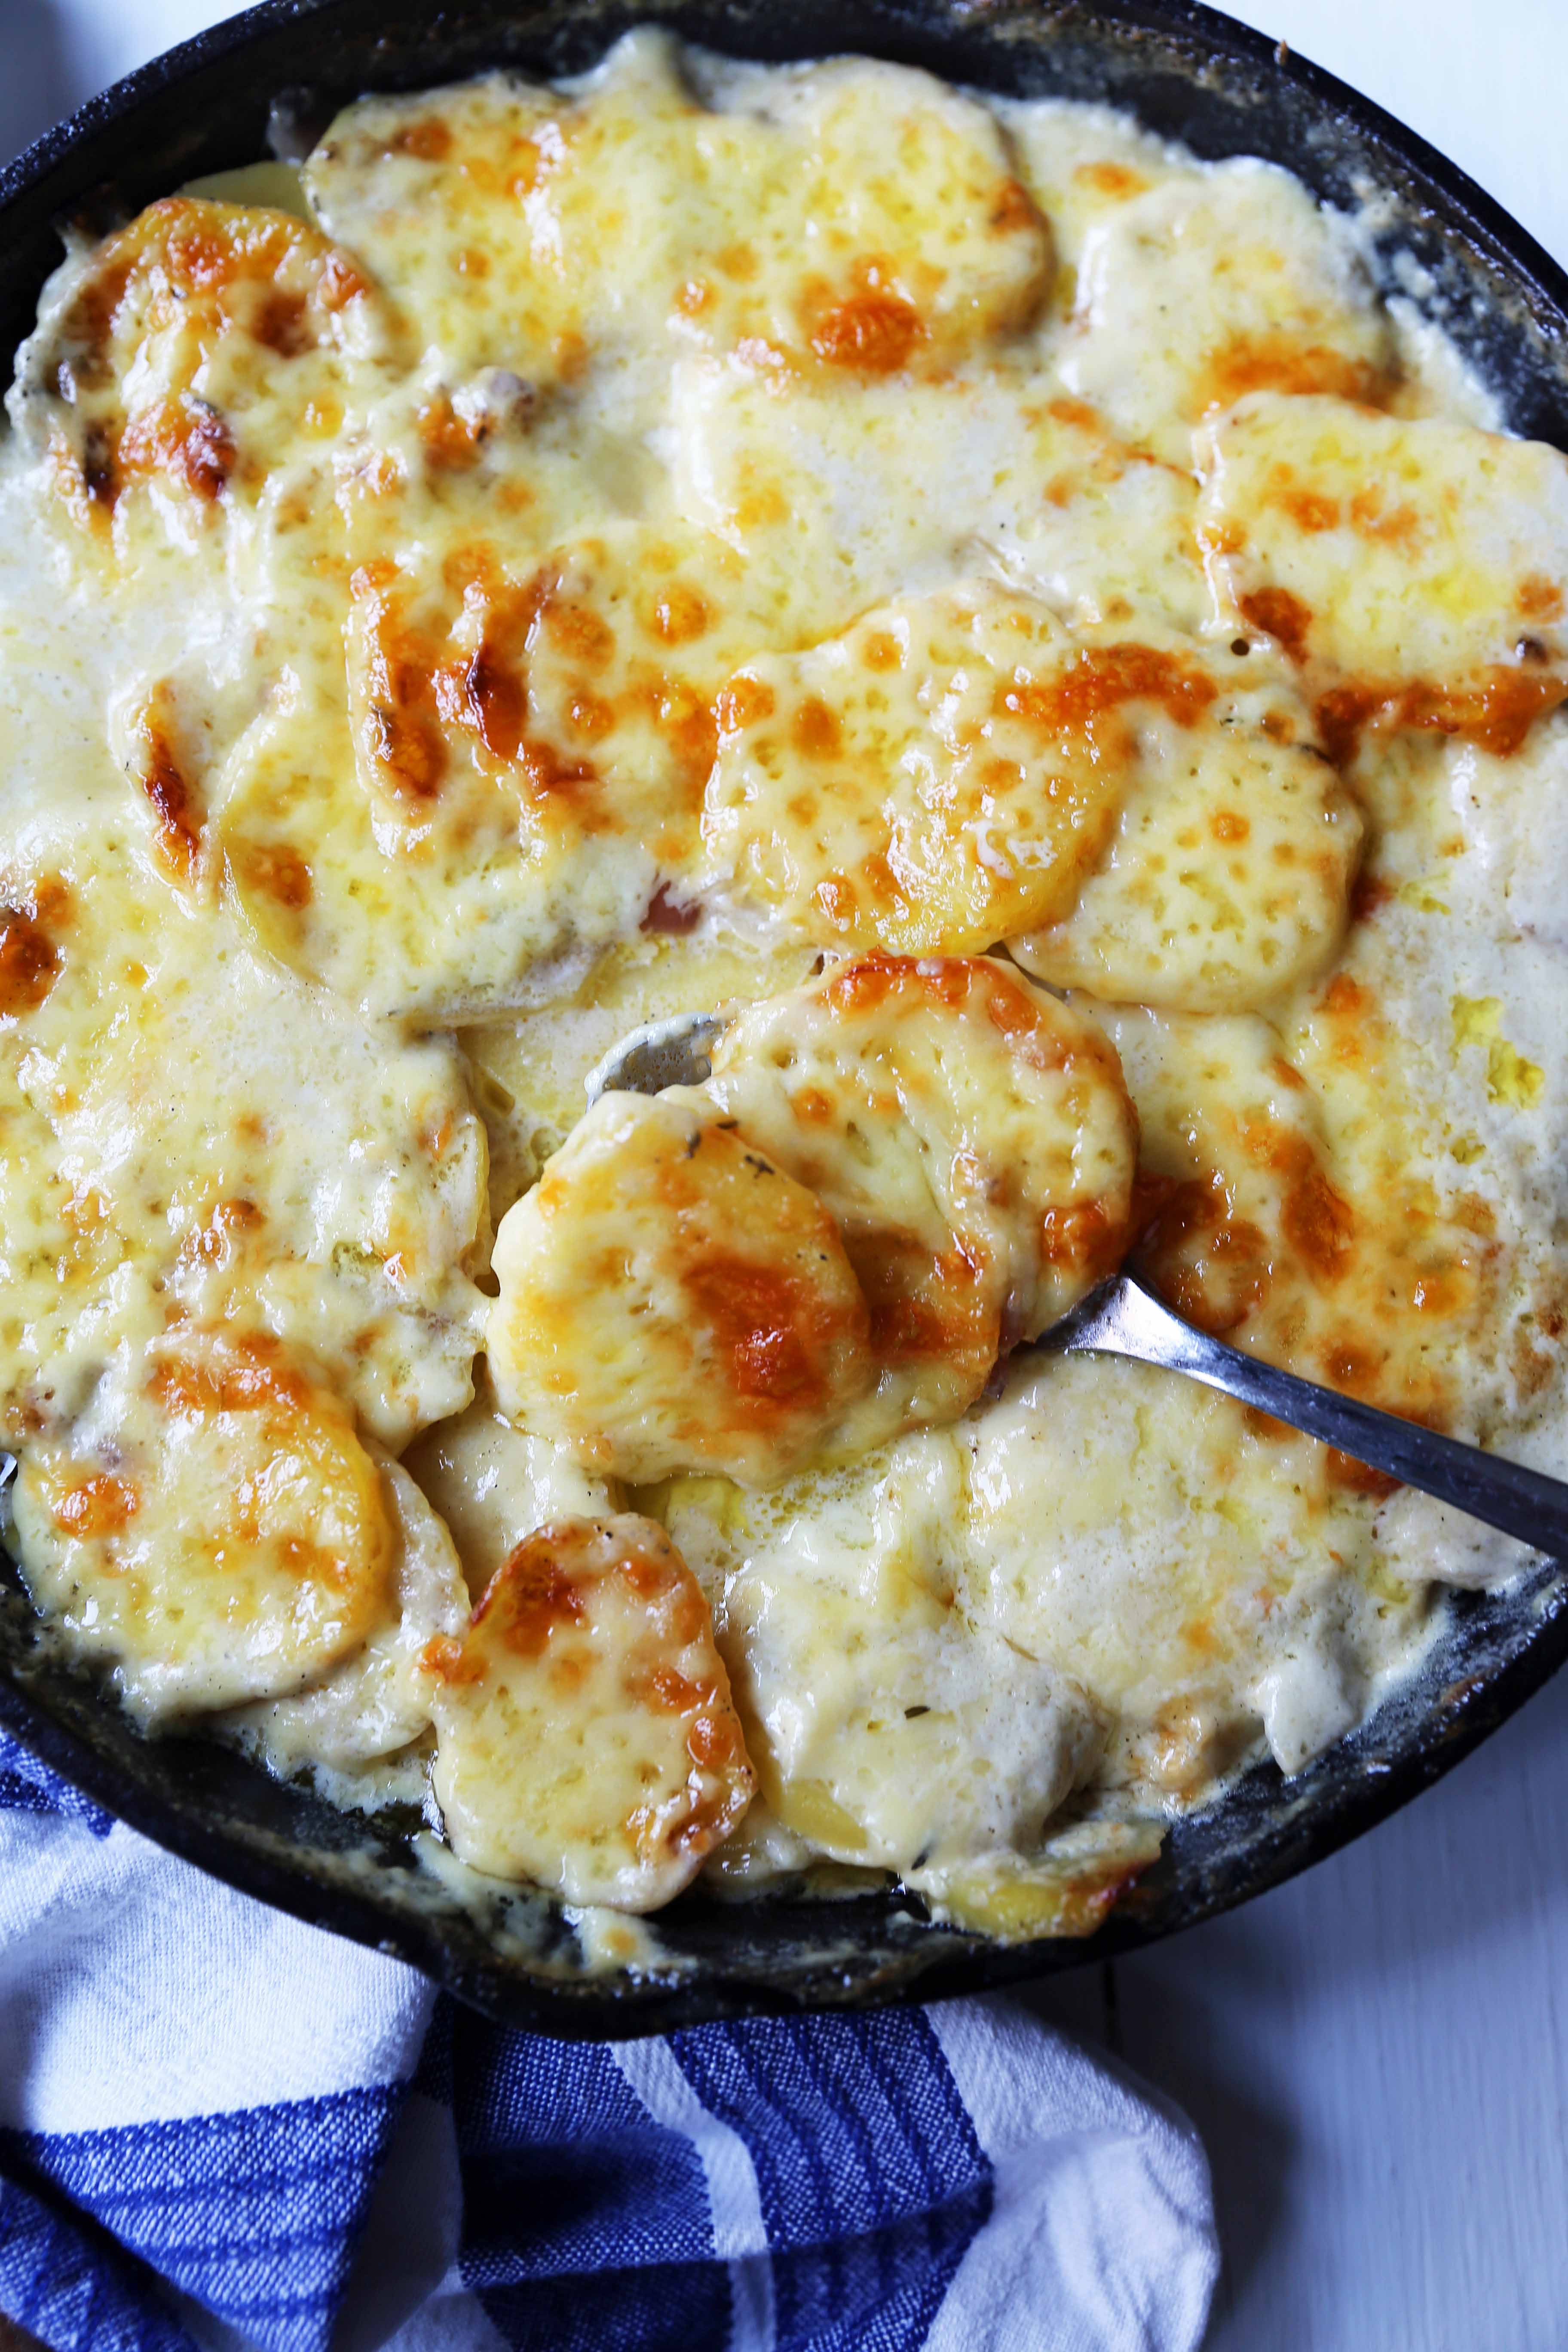 Cheesy Potatoes Au Gratin. Homemade cheesy scalloped potatoes with a rich cream sauce and melted cheddar cheese. The perfect potato side dish recipe! www.modernhoney.com #scallopedpotatoes #potatoesaugratin #potatoes #potato #thanksgiving